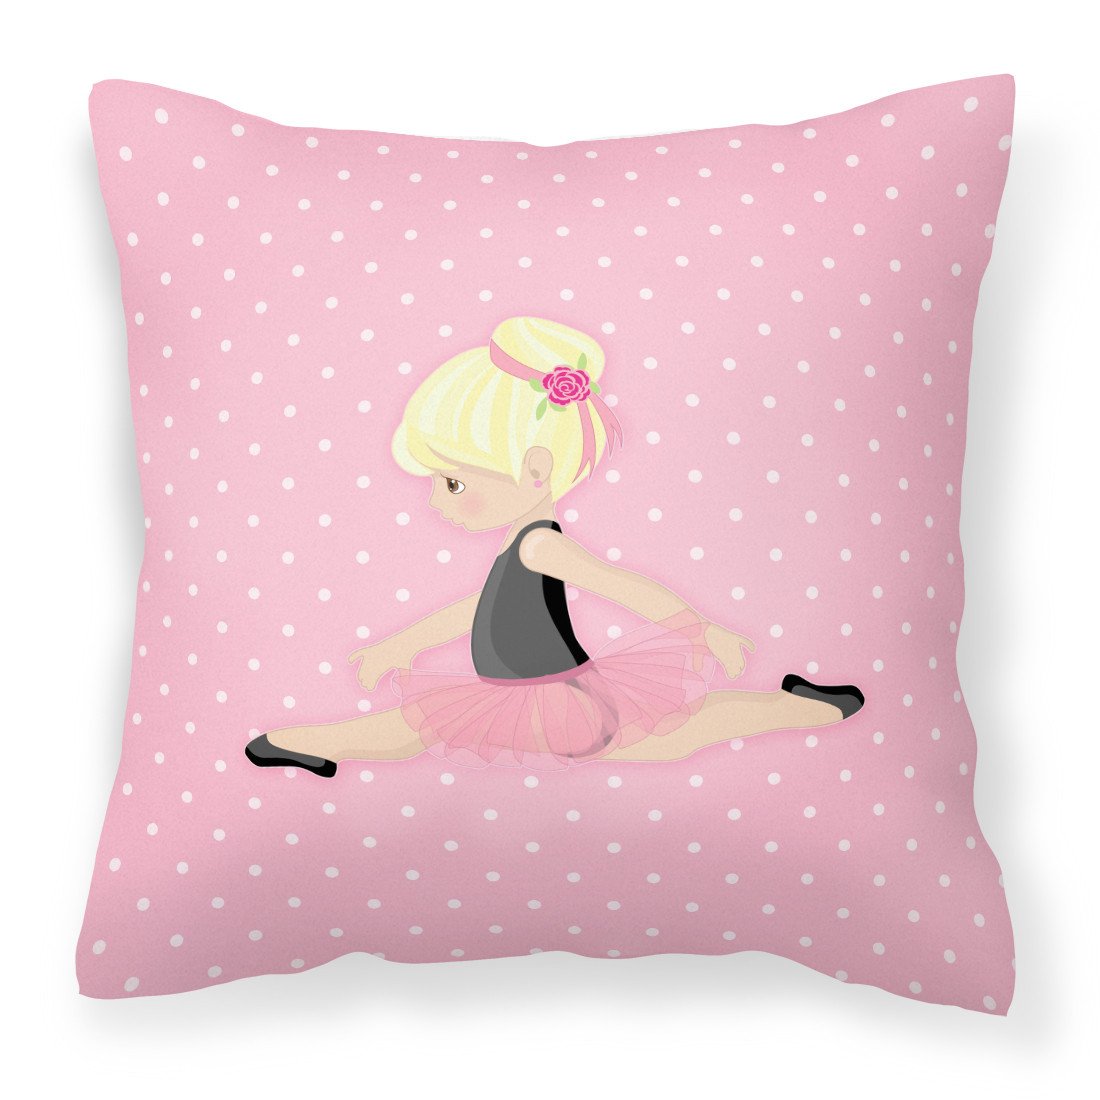 Ballerina Blonde Jete Fabric Decorative Pillow BB5166PW1818 by Caroline's Treasures